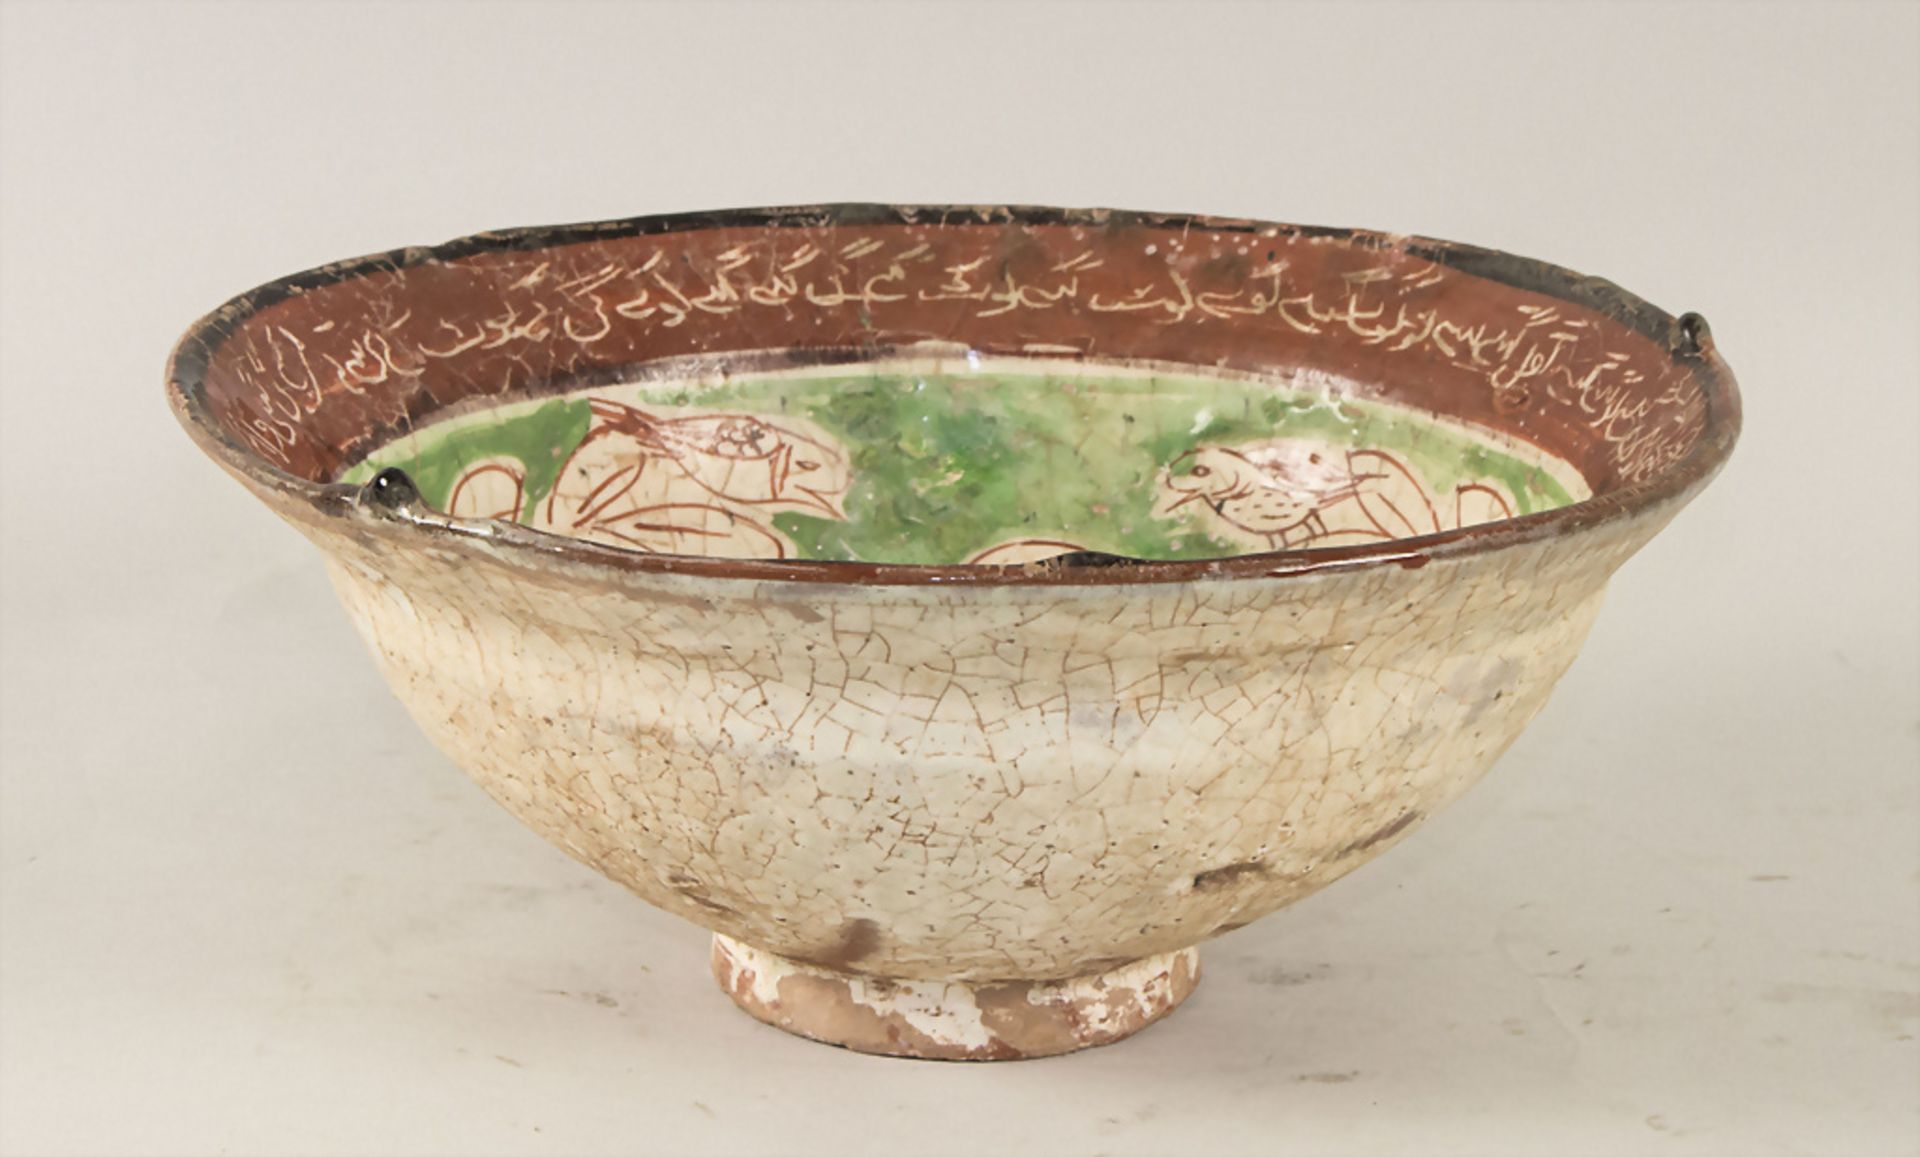 Keramikschale / A ceramic bowl, Persien (Iran), 16. Jh. - Image 2 of 4